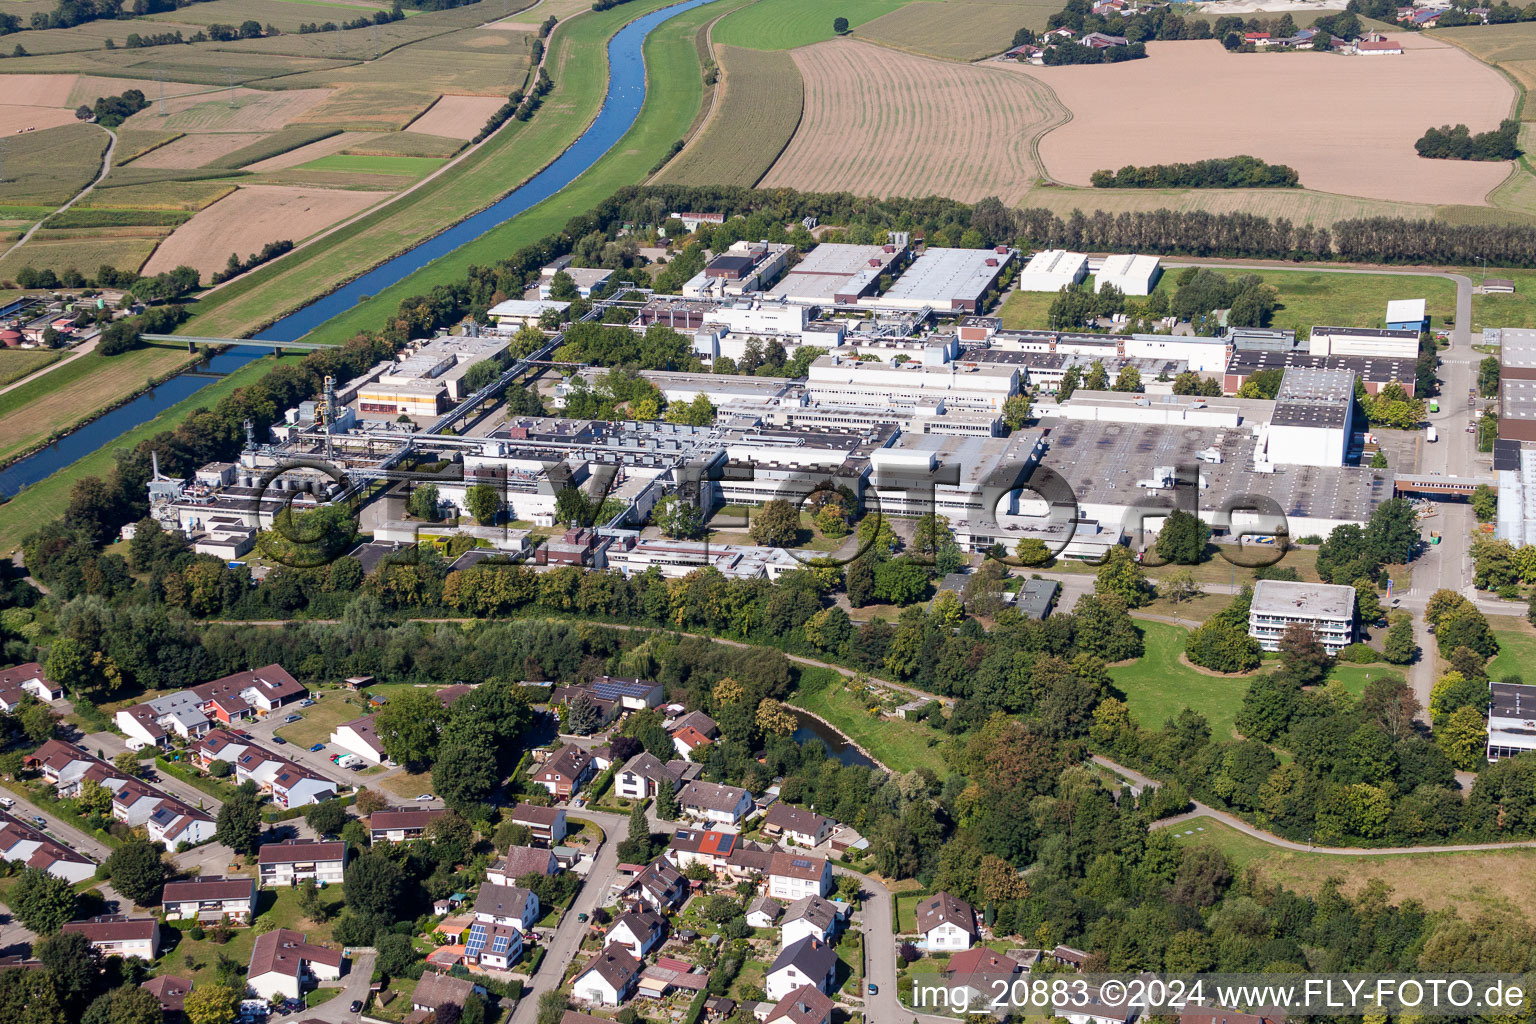 Vue aérienne de Parc industriel Willstätt à Willstätt dans le département Bade-Wurtemberg, Allemagne